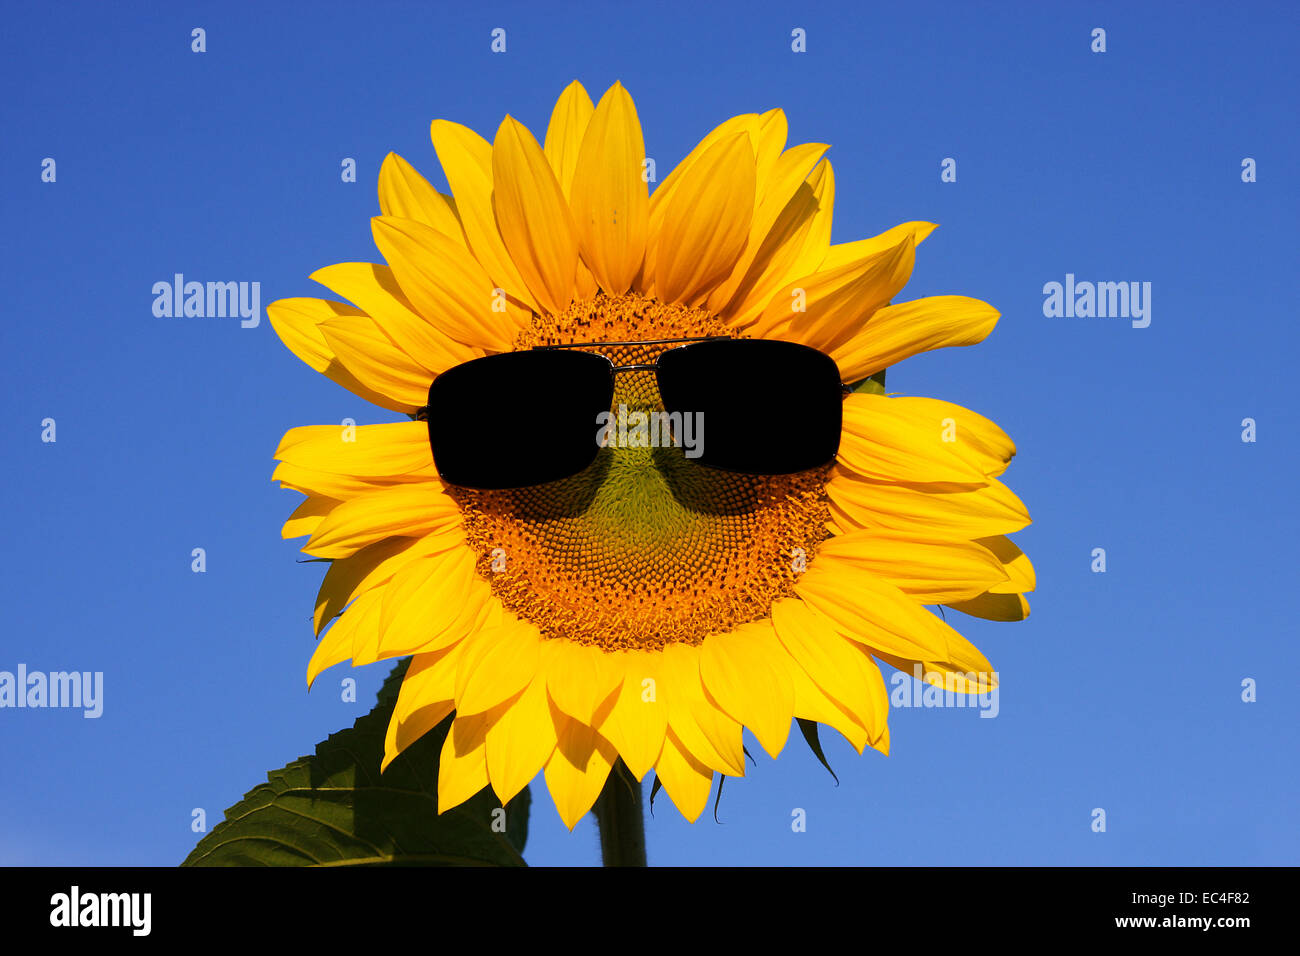 funny sunflower Stock Photo